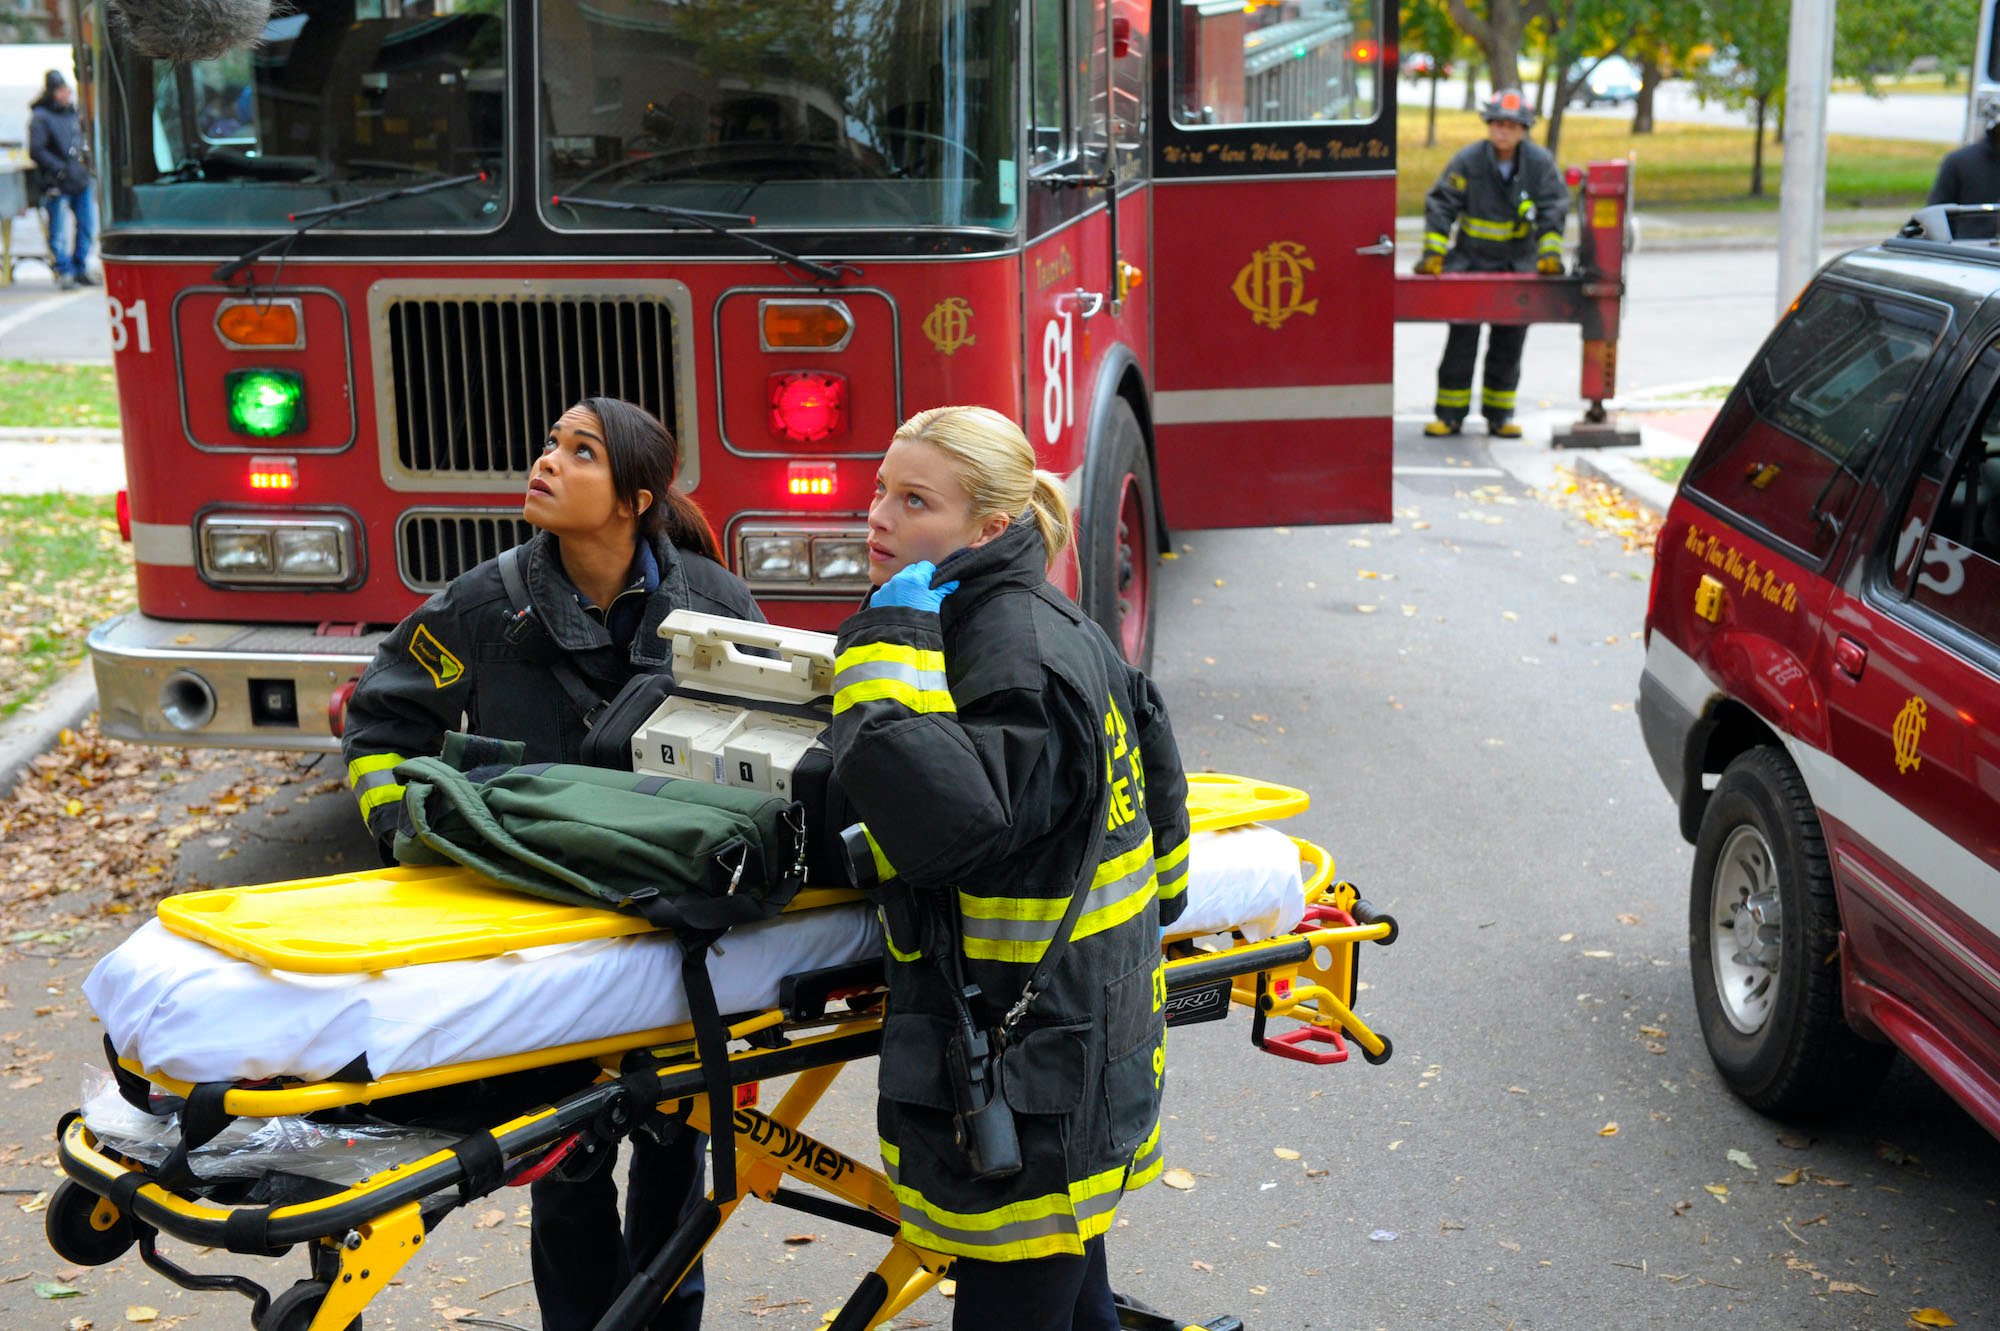 (L-R) Monica Raymund as Gabriella Dawson and Lauren German as Leslie Shay gathered around a stretcher in front of fire trucks